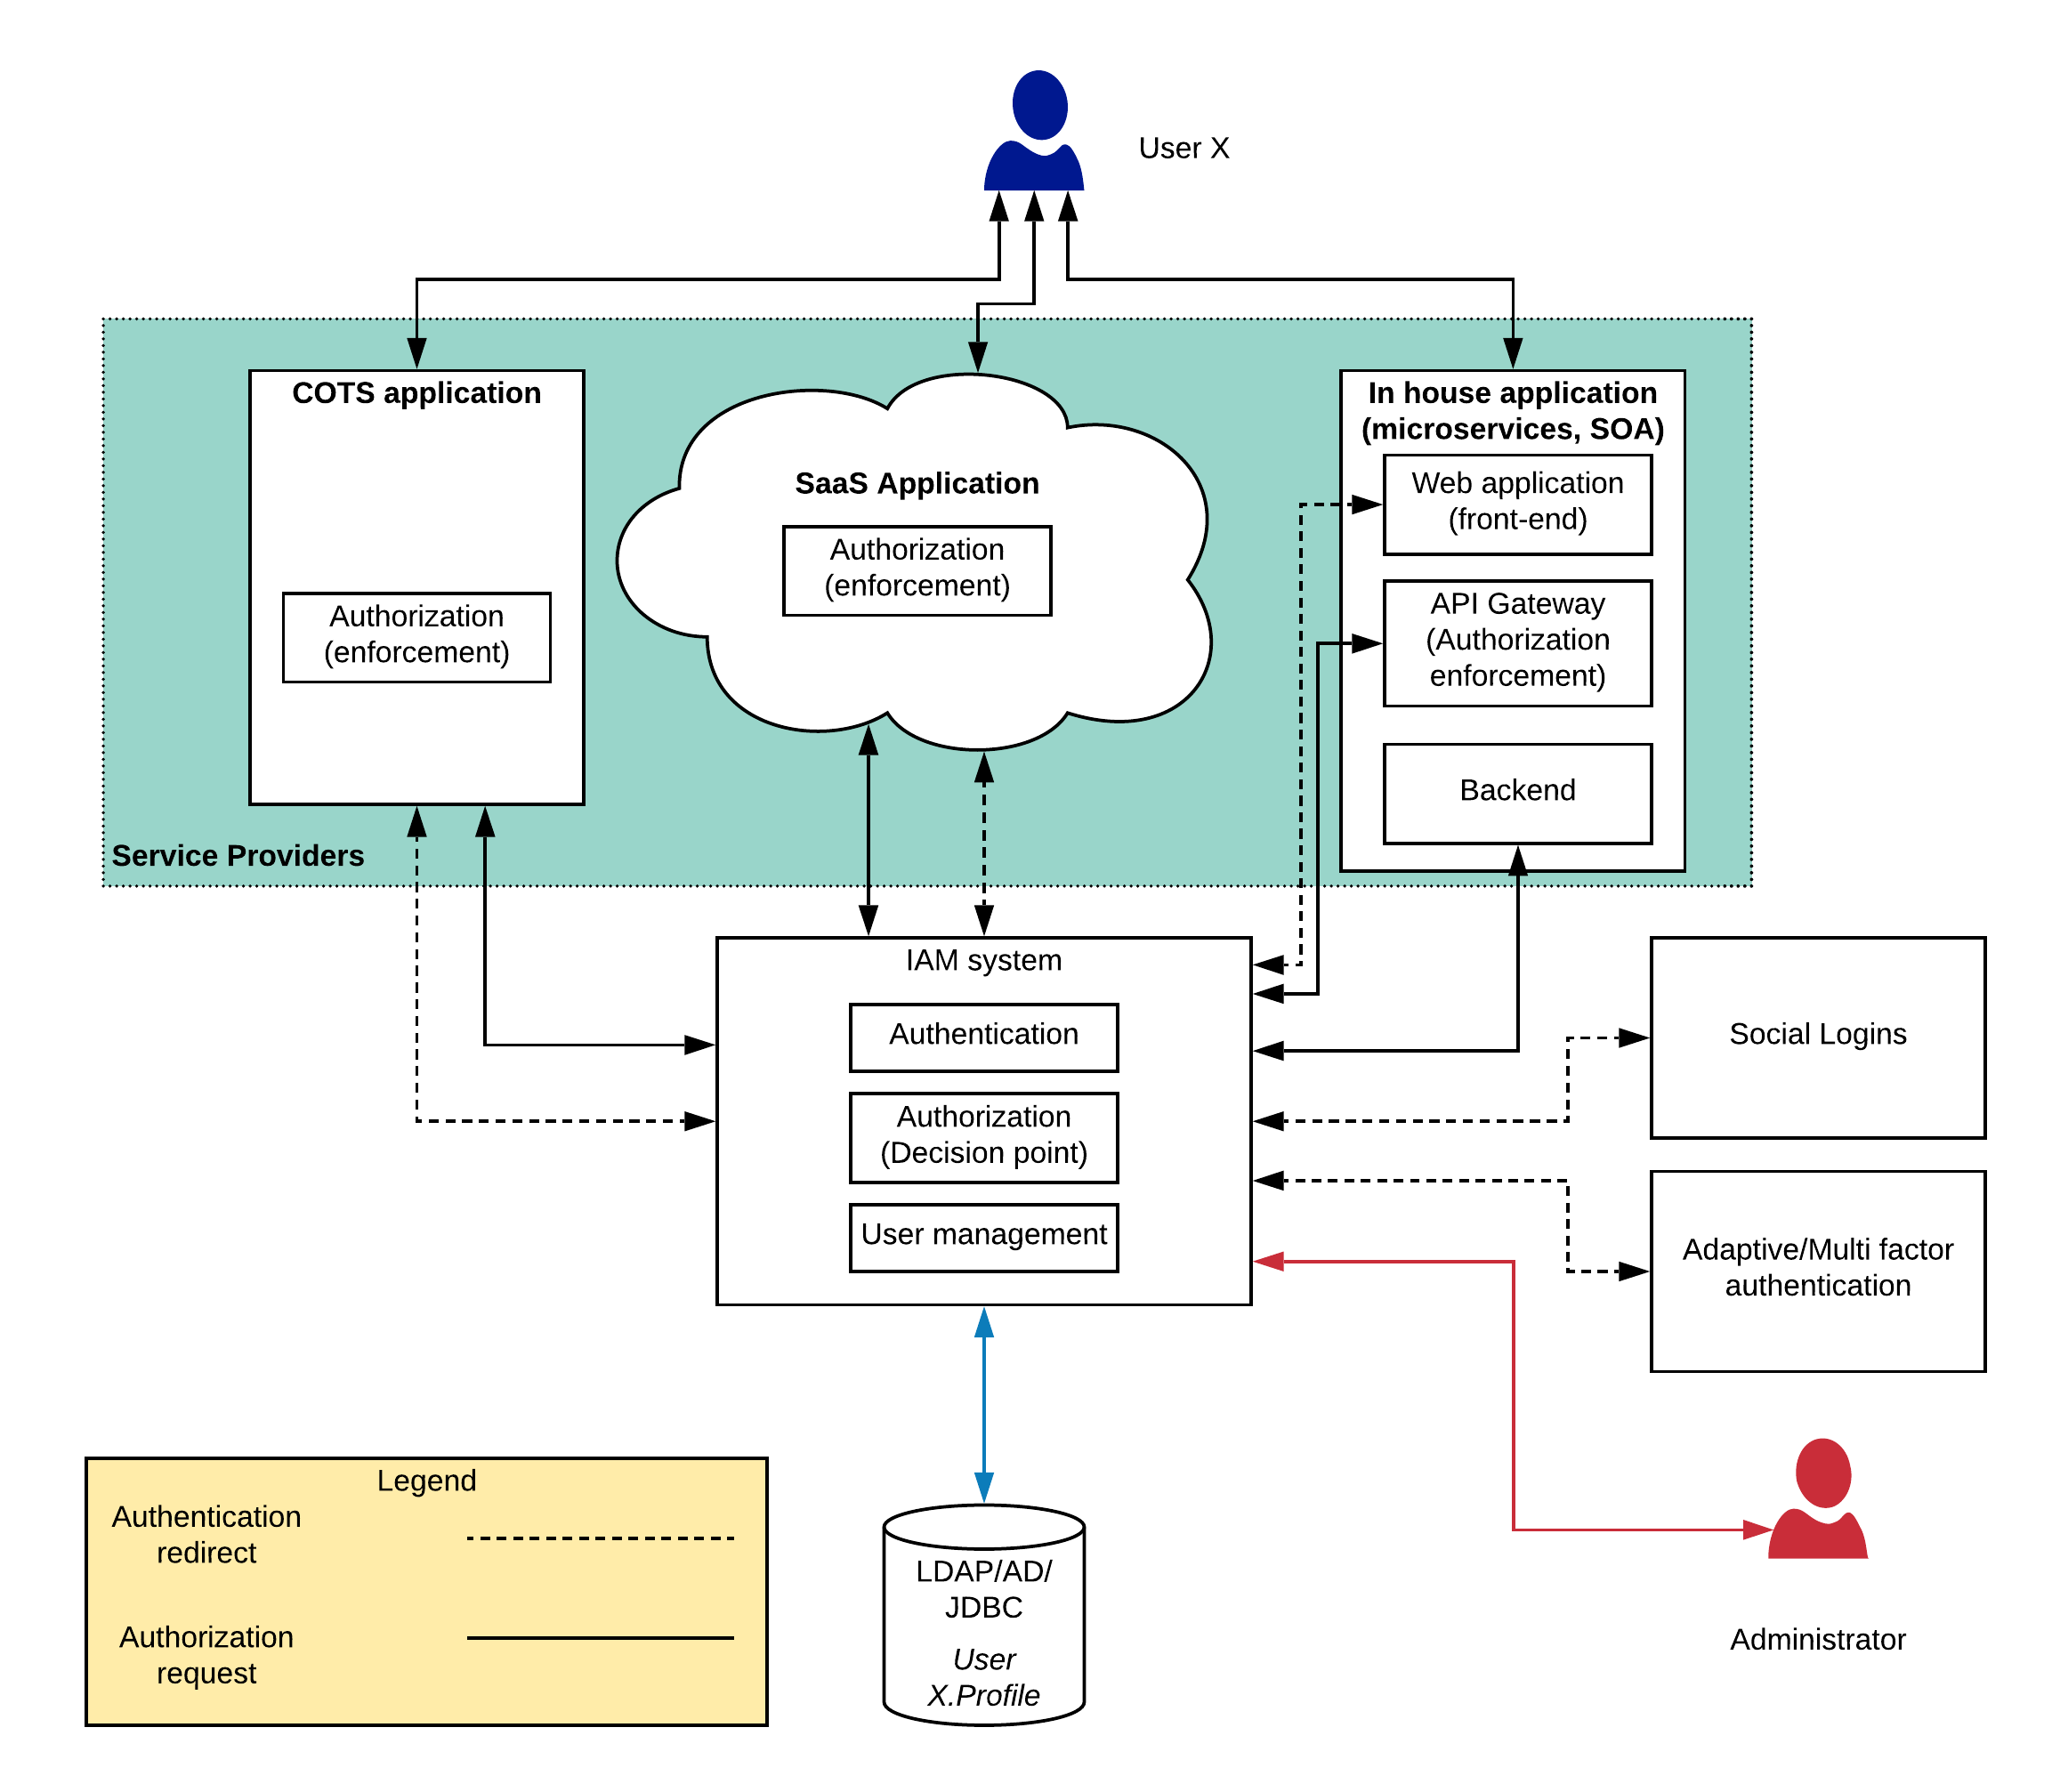 Figure 2: Centralized security architecture for enterprise